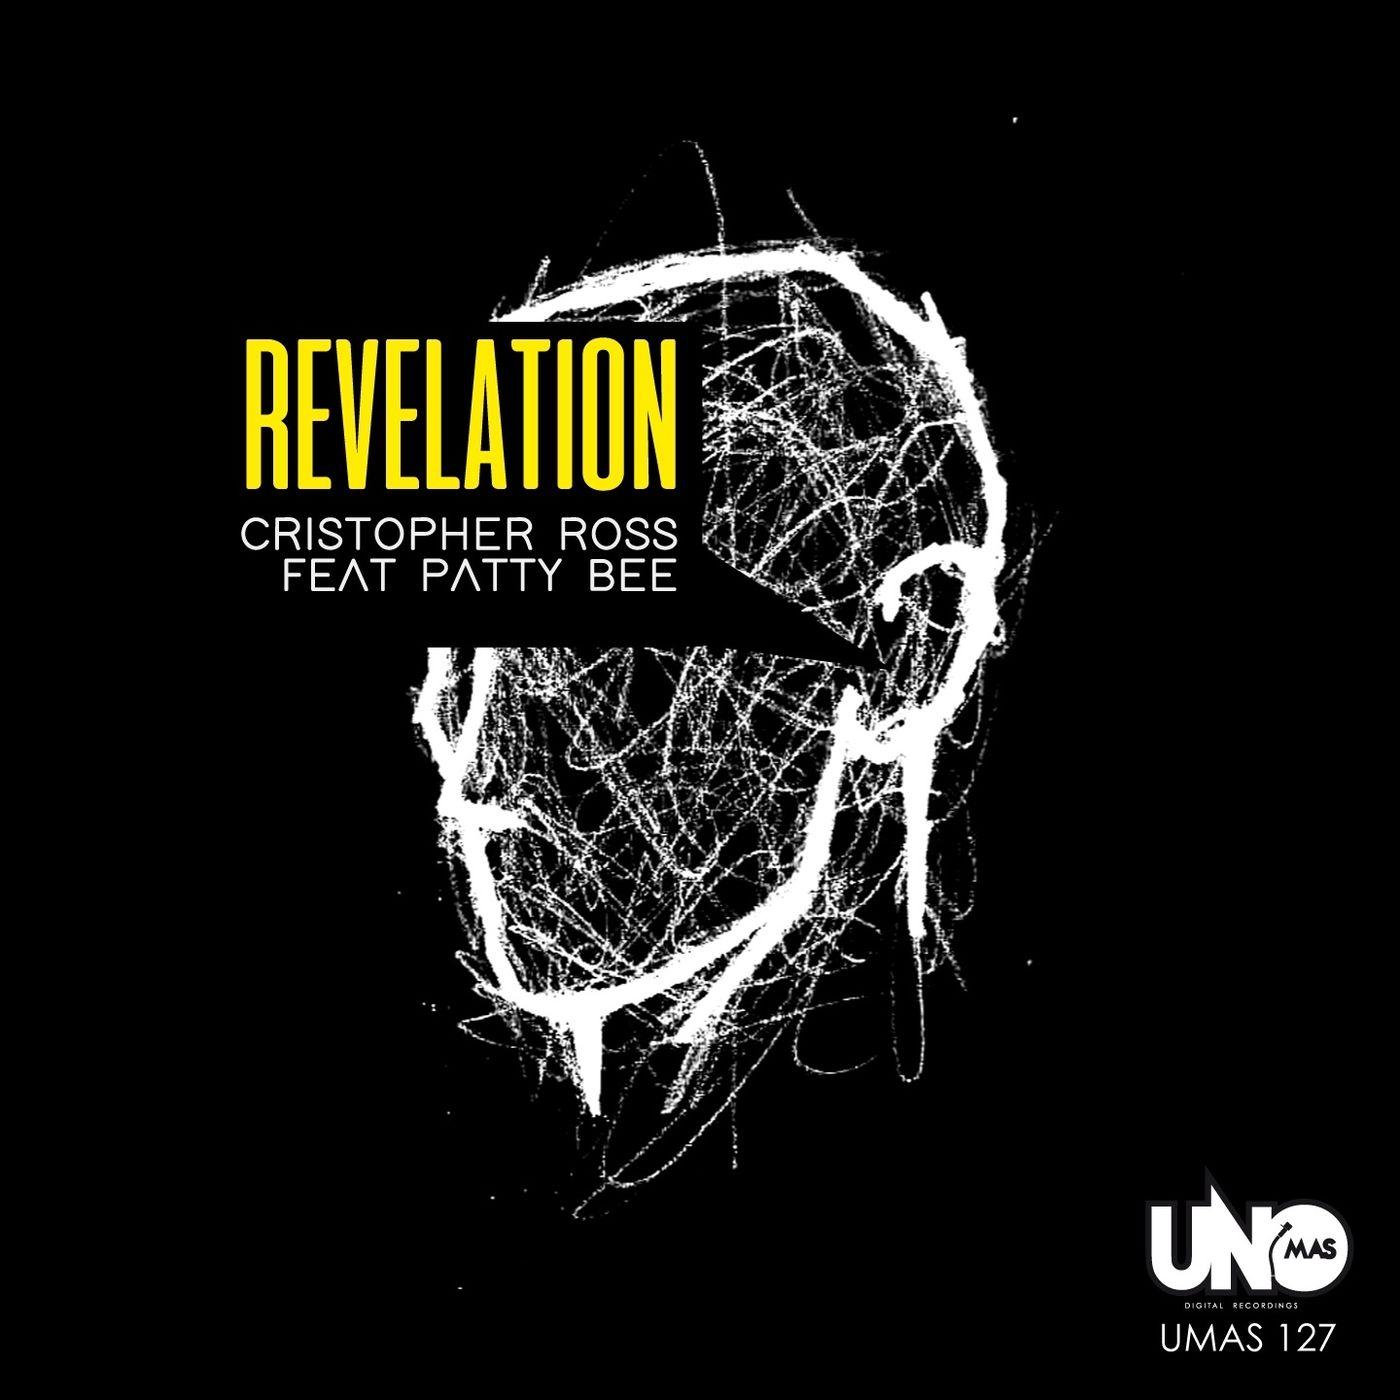 Cristopher Ross feat. Patty Bee - Revelation / Uno Mas digital recordings